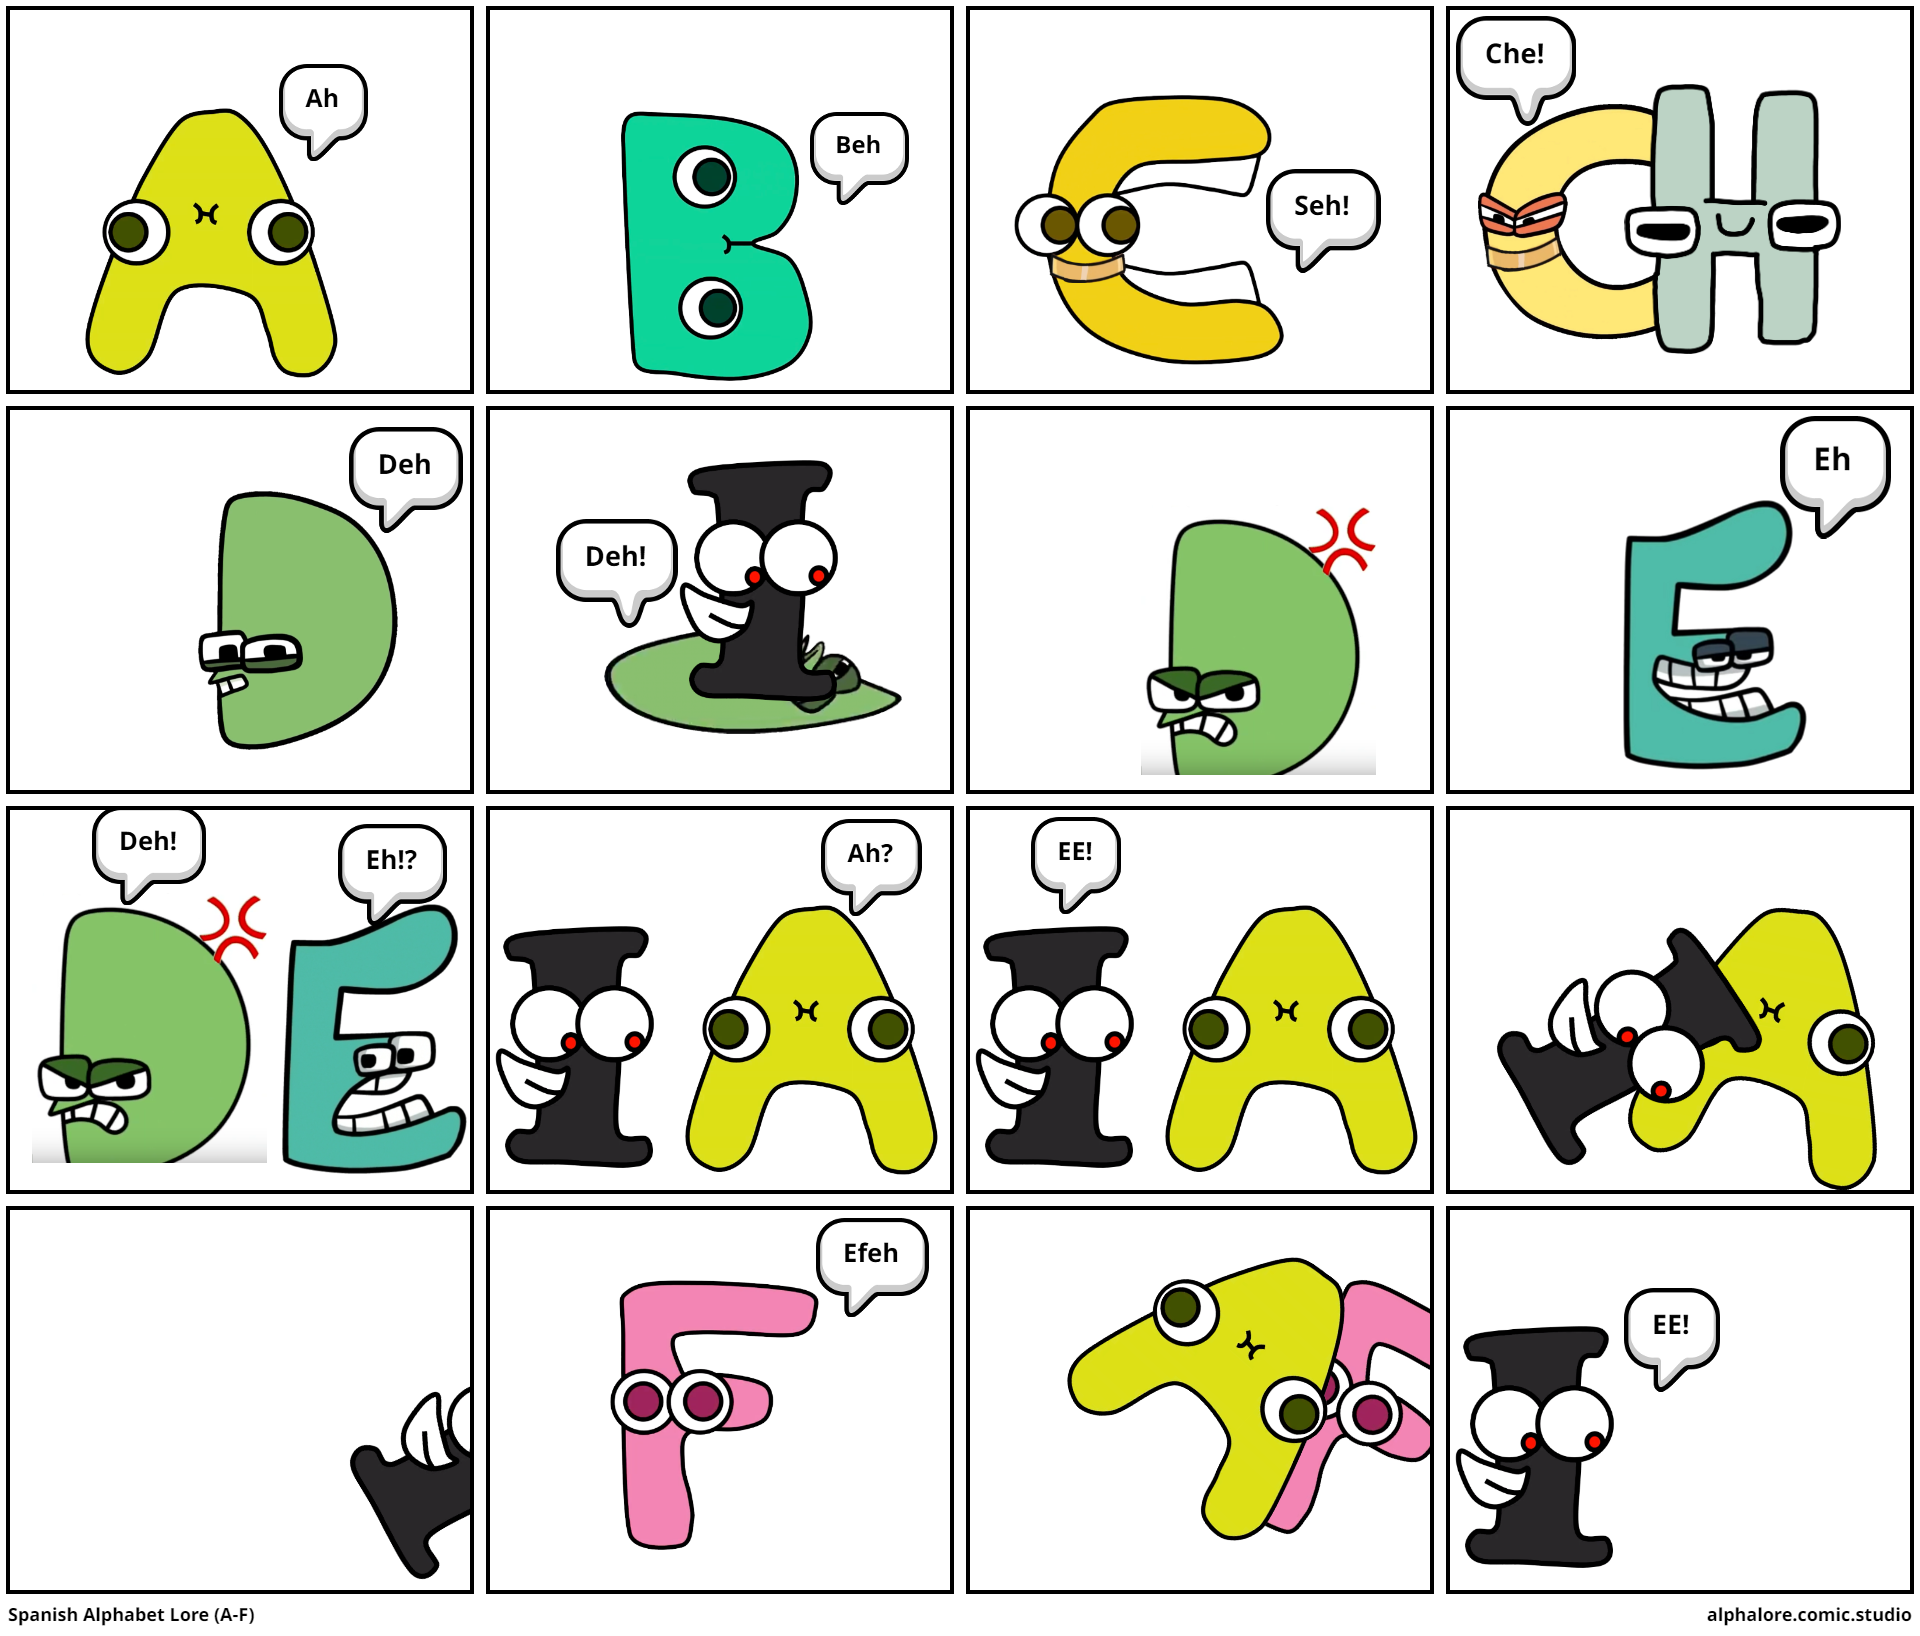 Spanish Alphabet Lore N - Comic Studio